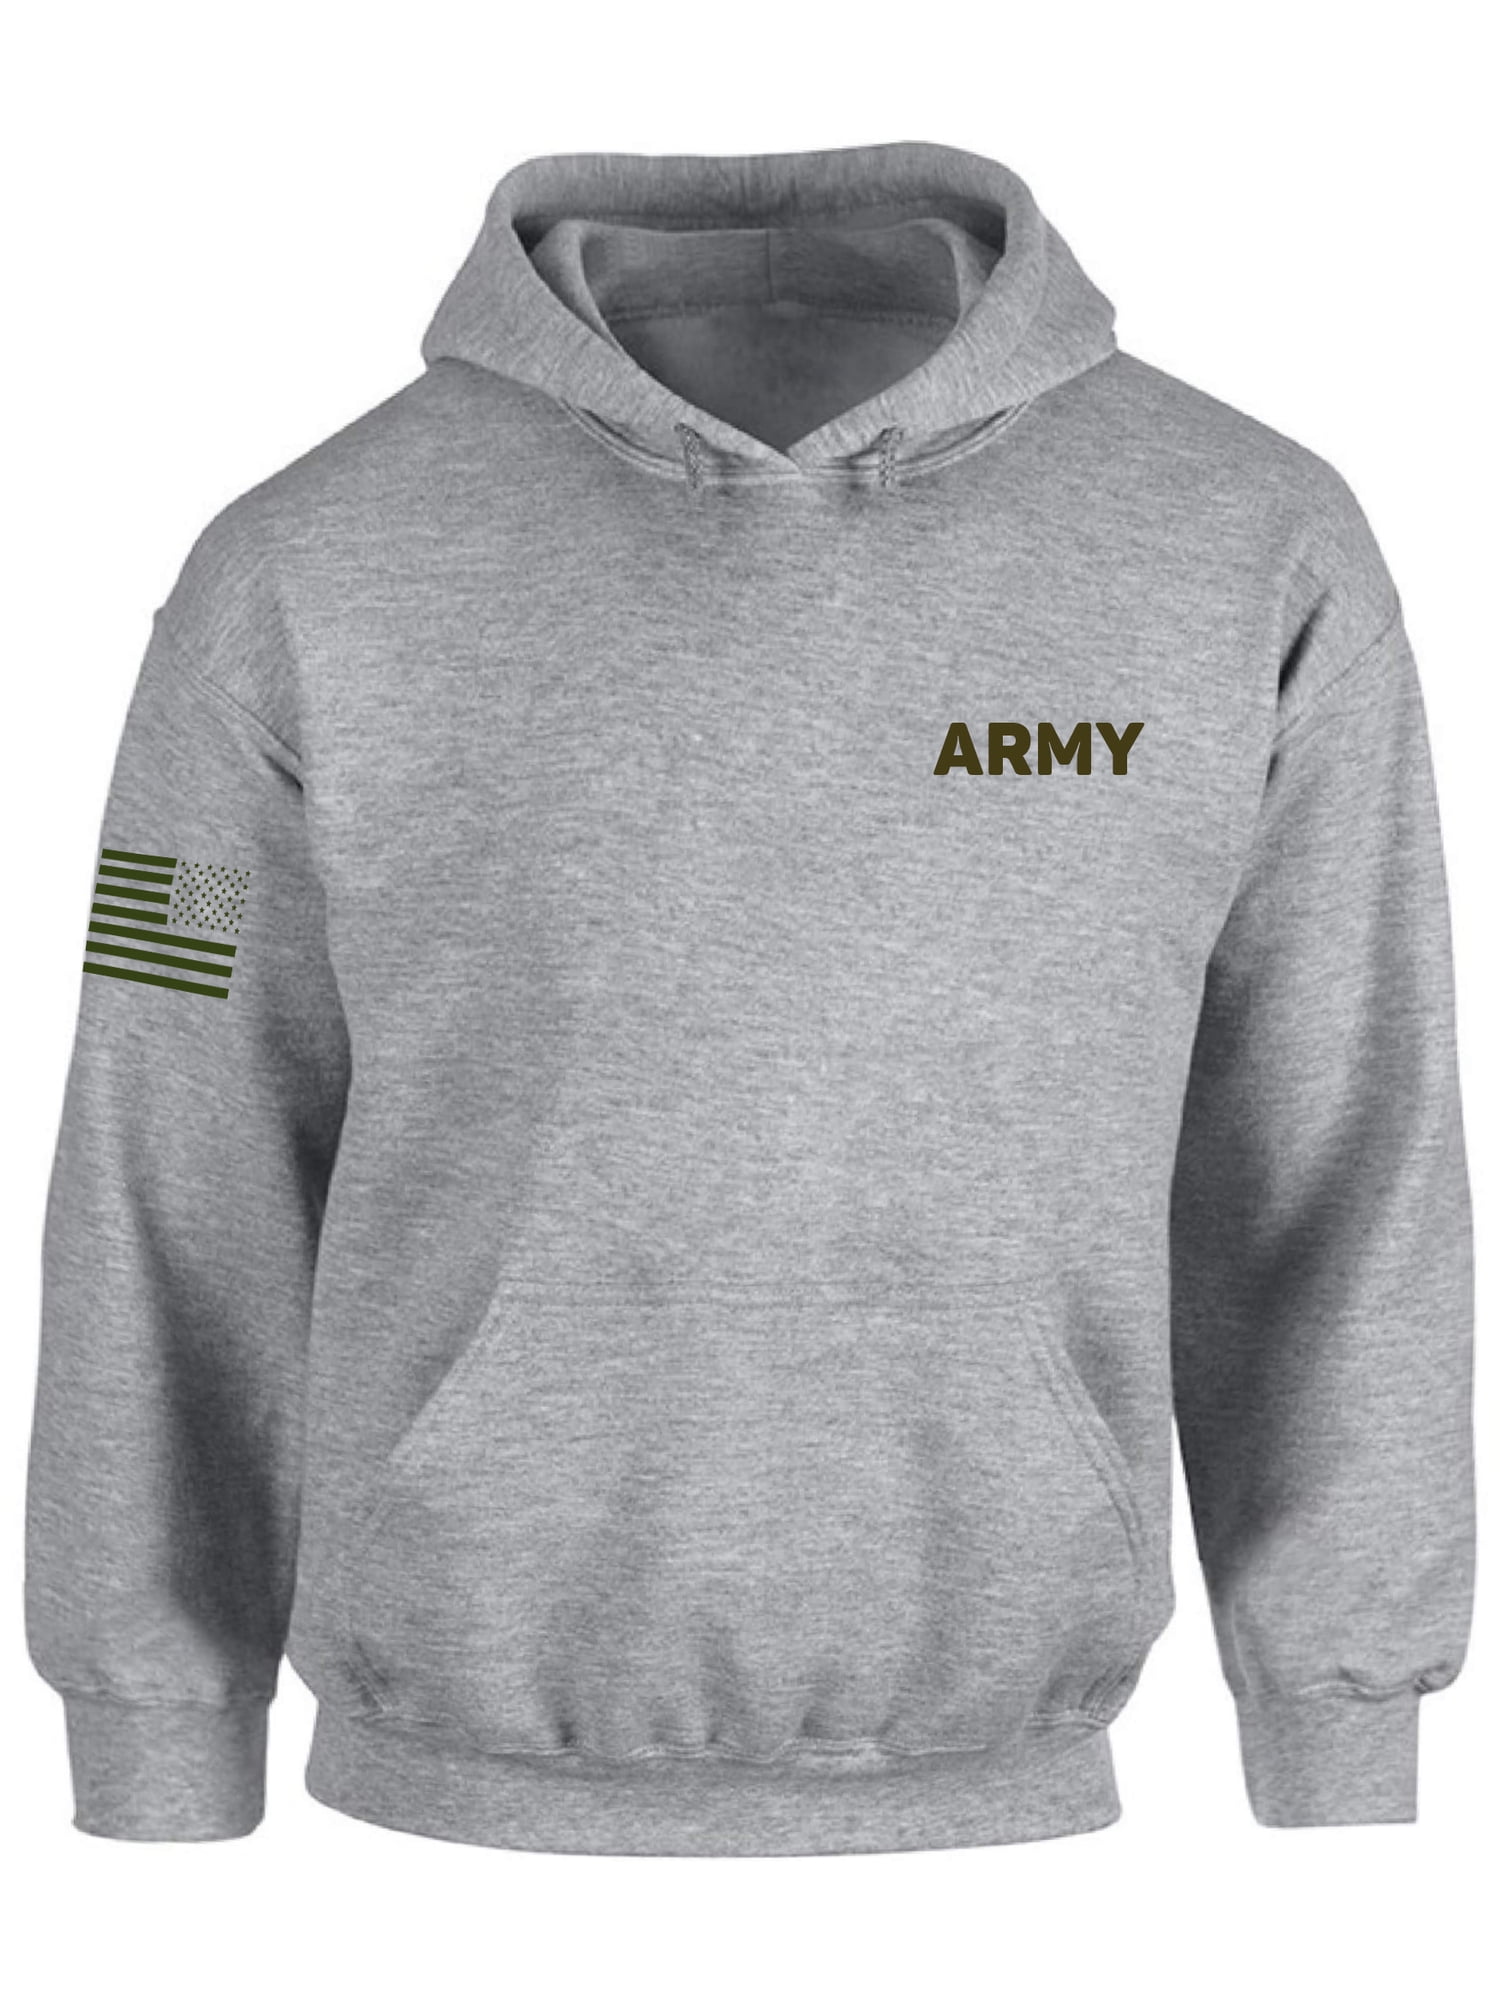 Awkward Styles Army Hooded Sweatshirt with Usa Flag on Sleeve Army ...